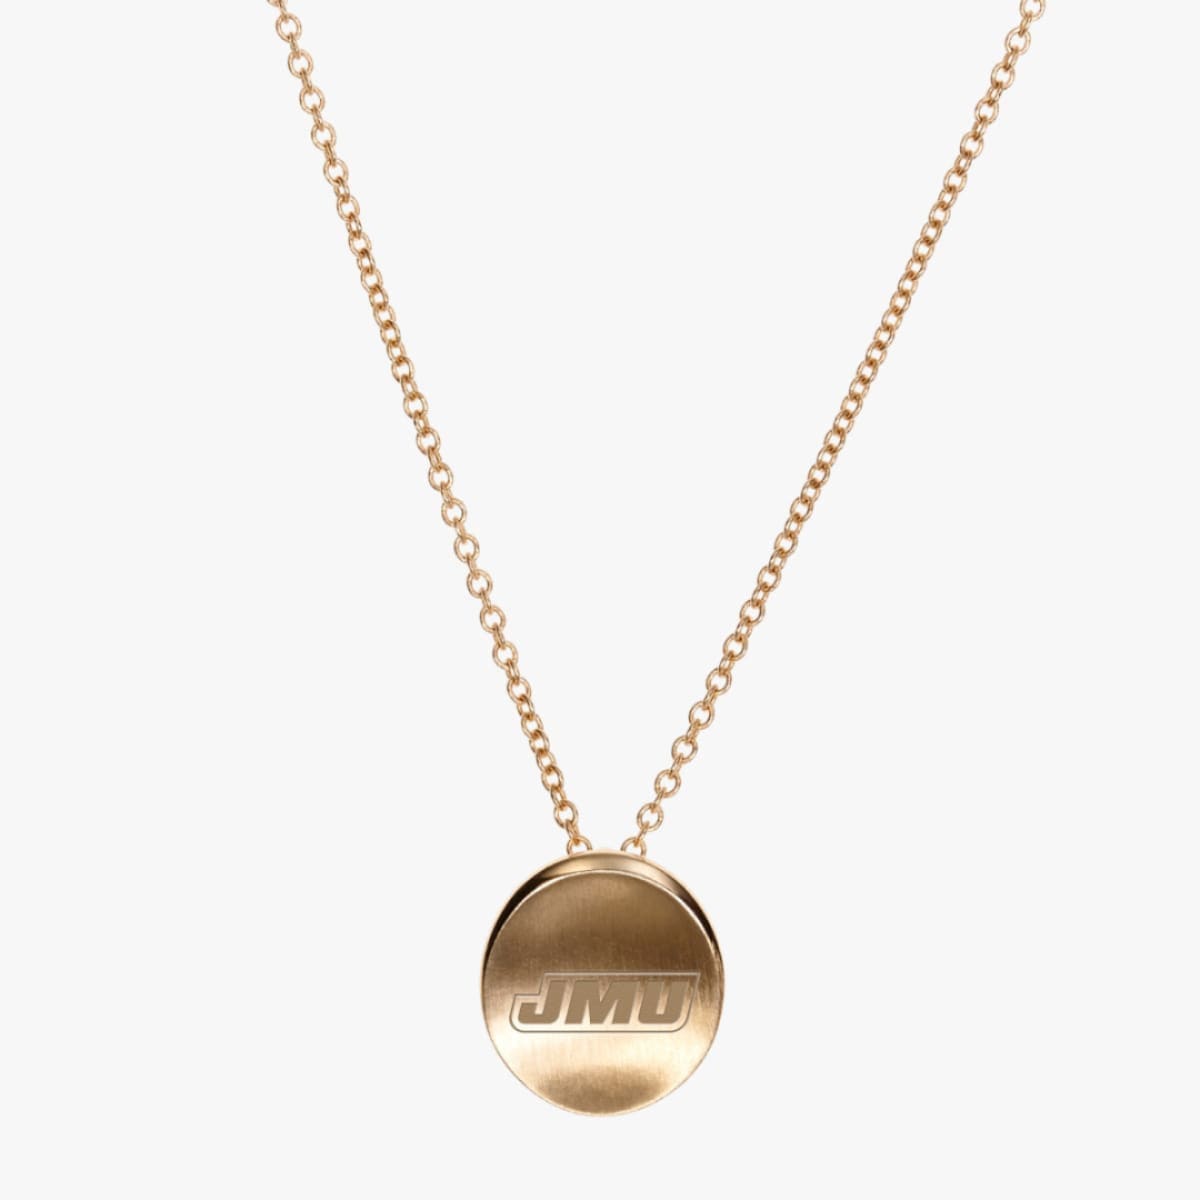 JMU Organic Petite Necklace by Kyle Cavan - 14K GOLD